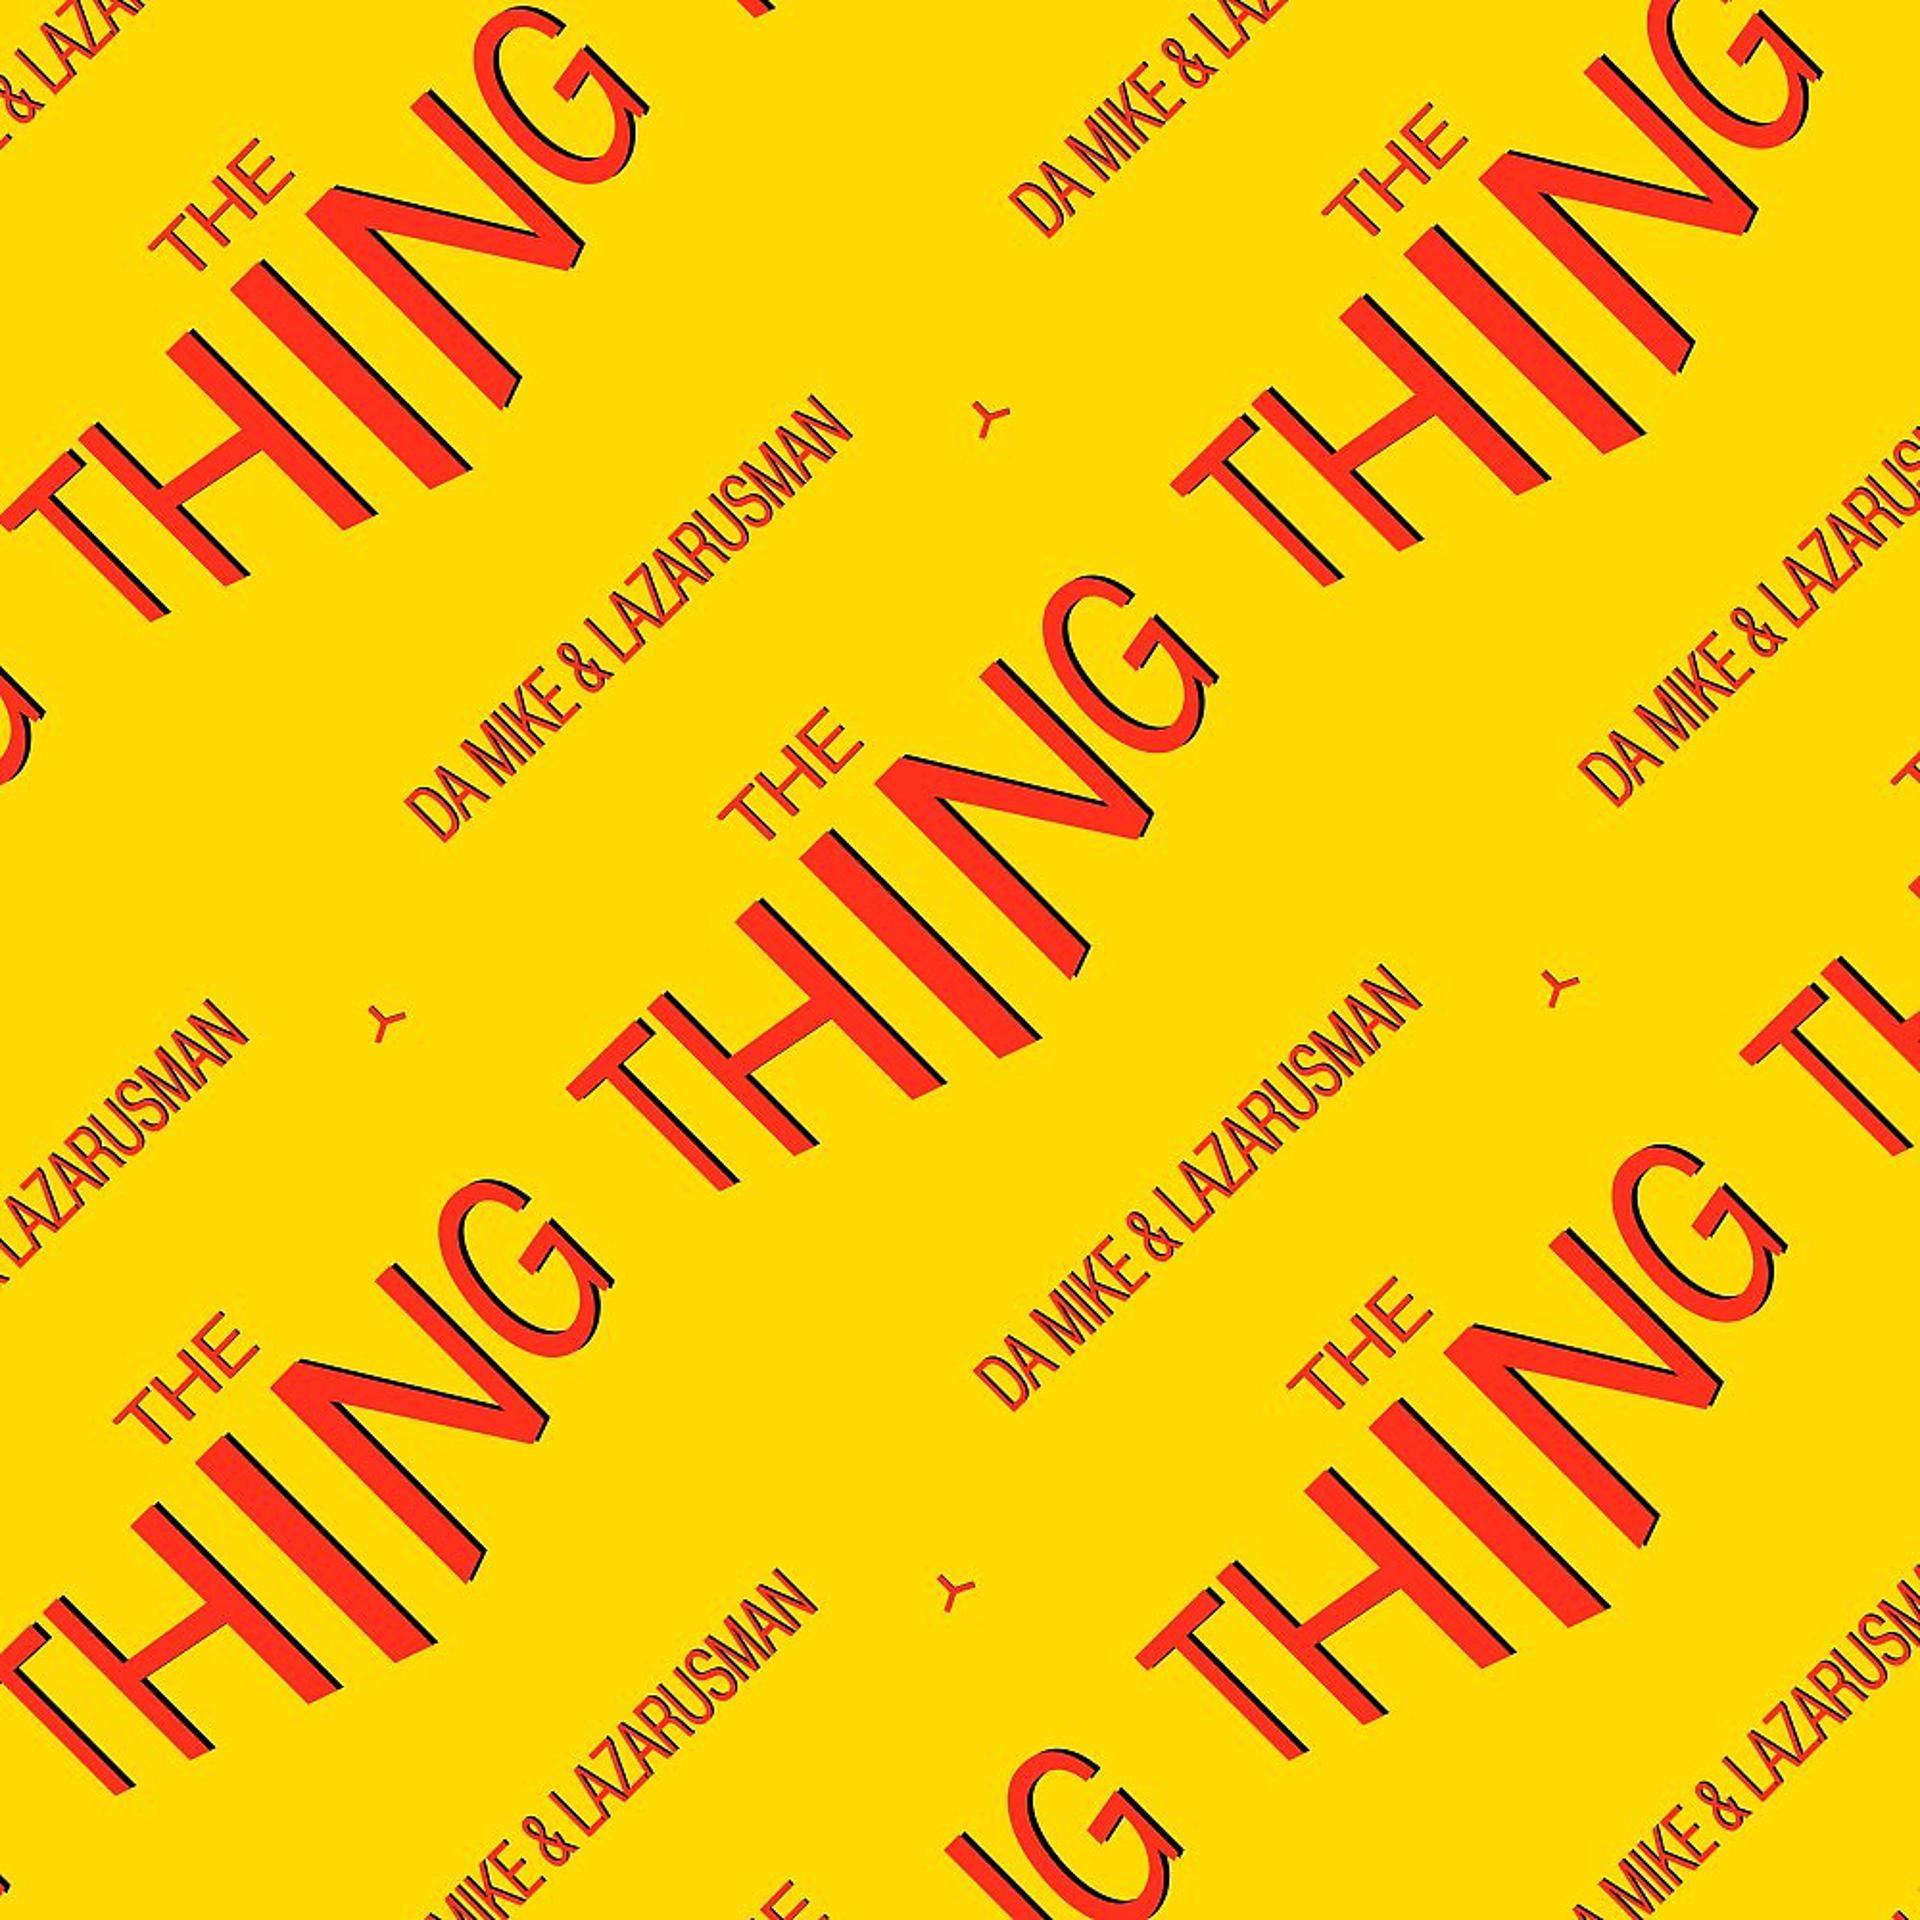 Постер альбома The Thing